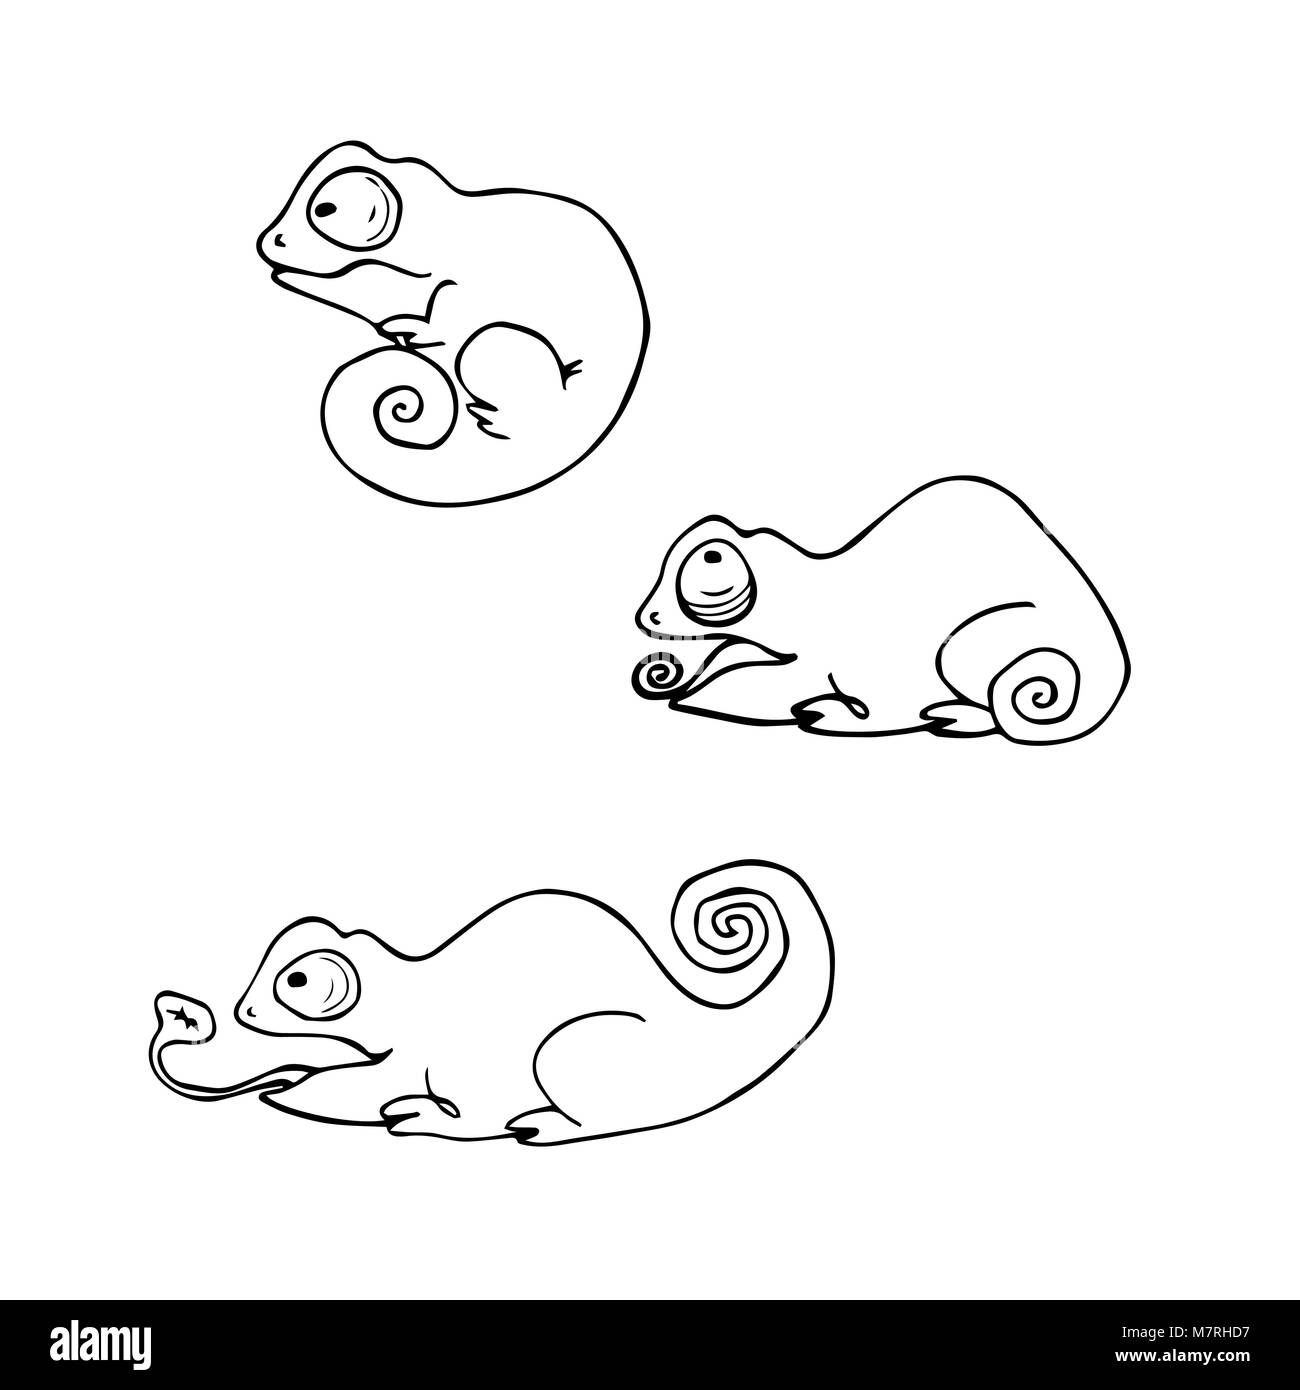 Cartoon cute chameleons set. Vector contour image. Stock Vector